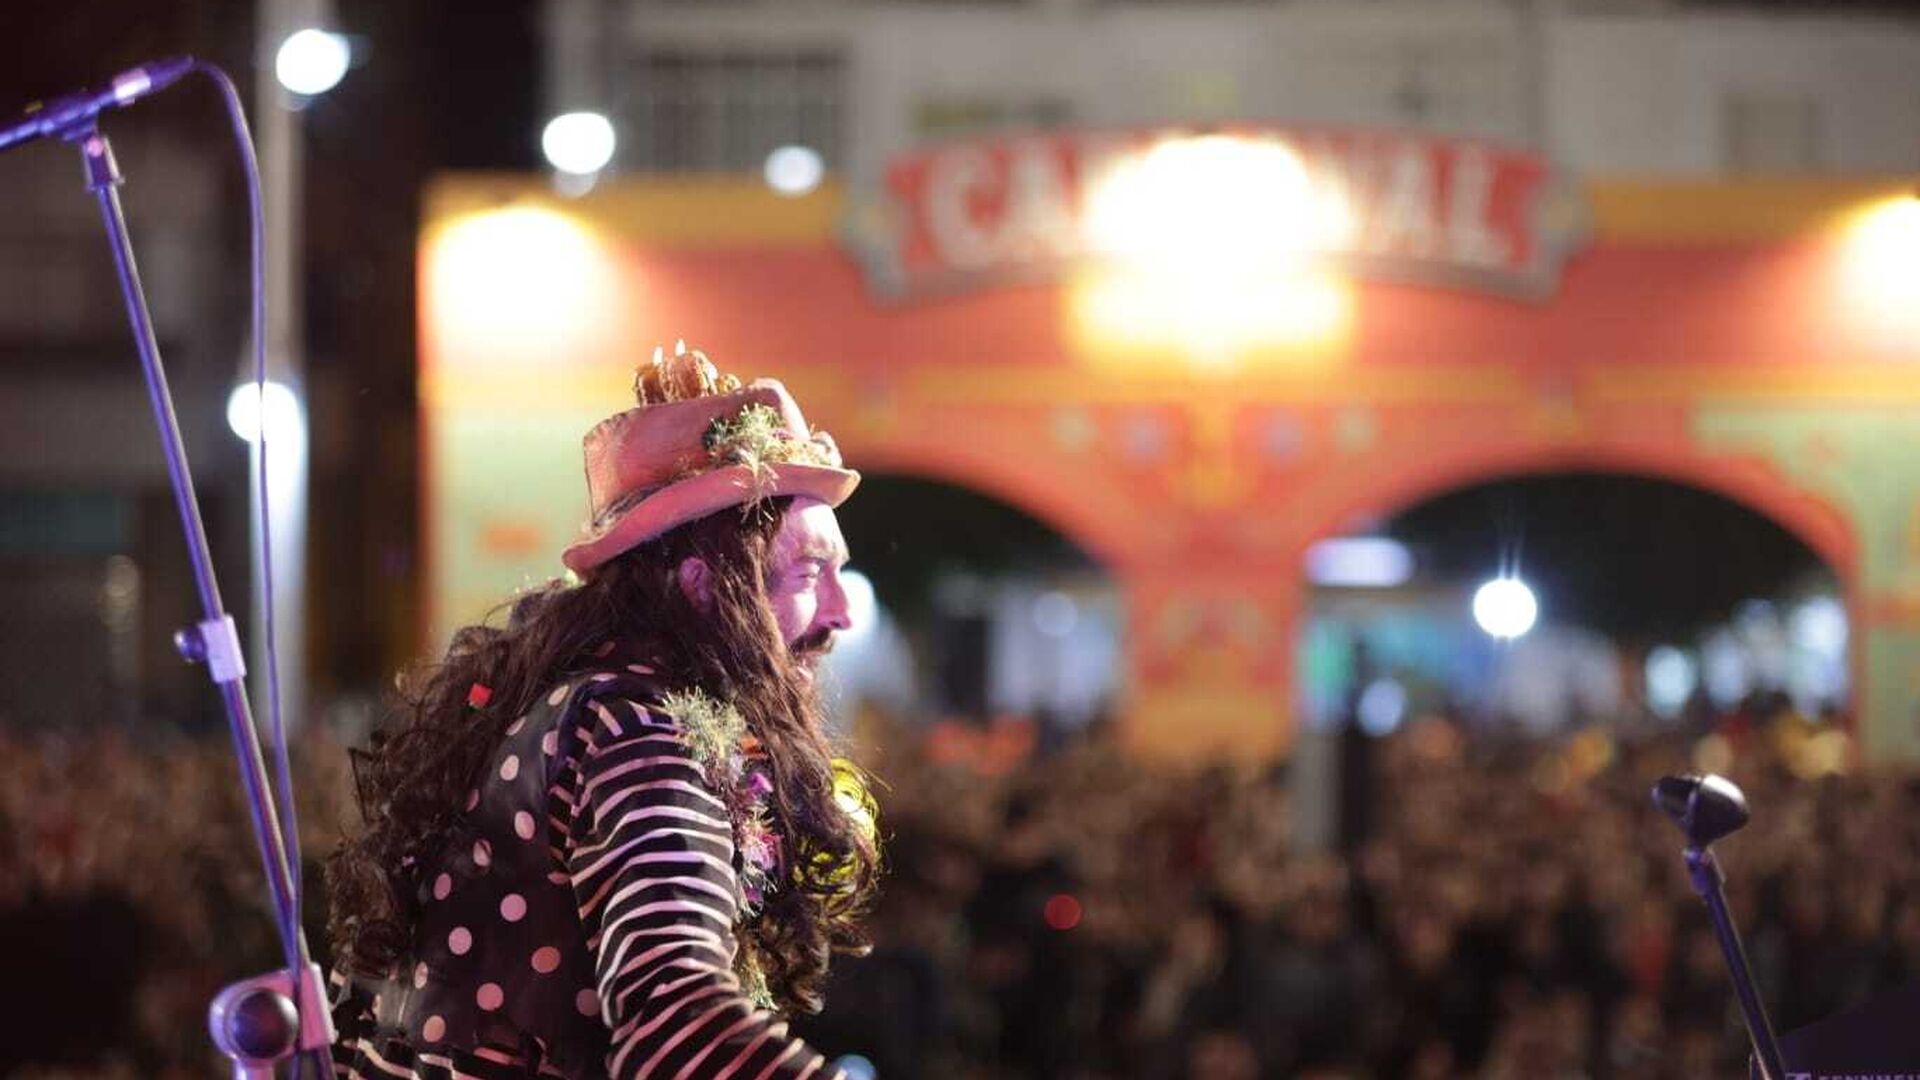 As&iacute; ha sido la Gala del Carnaval en San Fernando